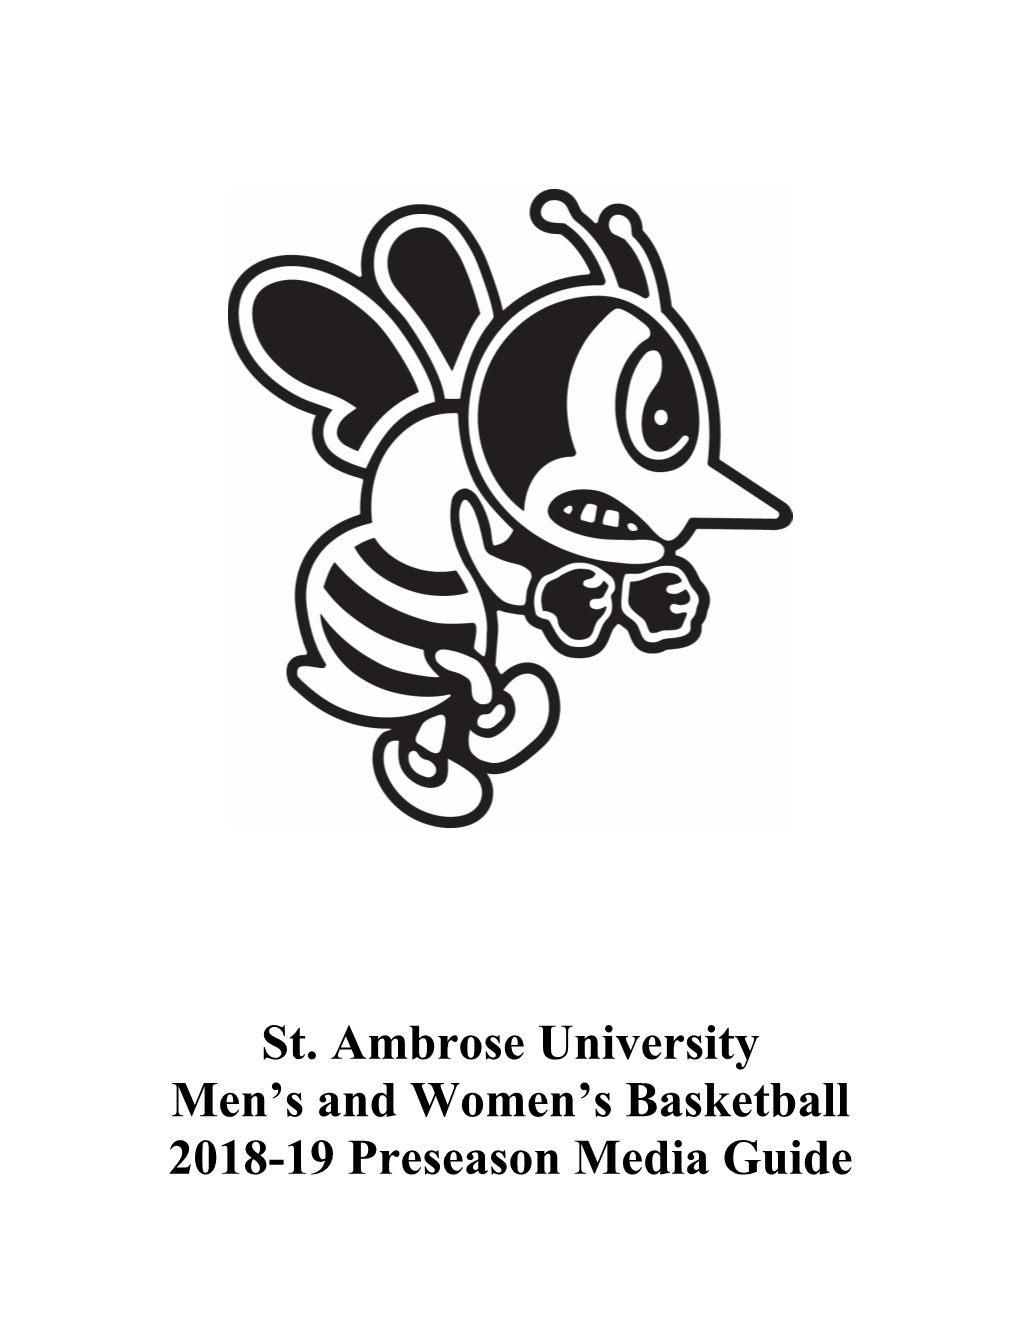 St. Ambrose University Men's and Women's Basketball 2018-19